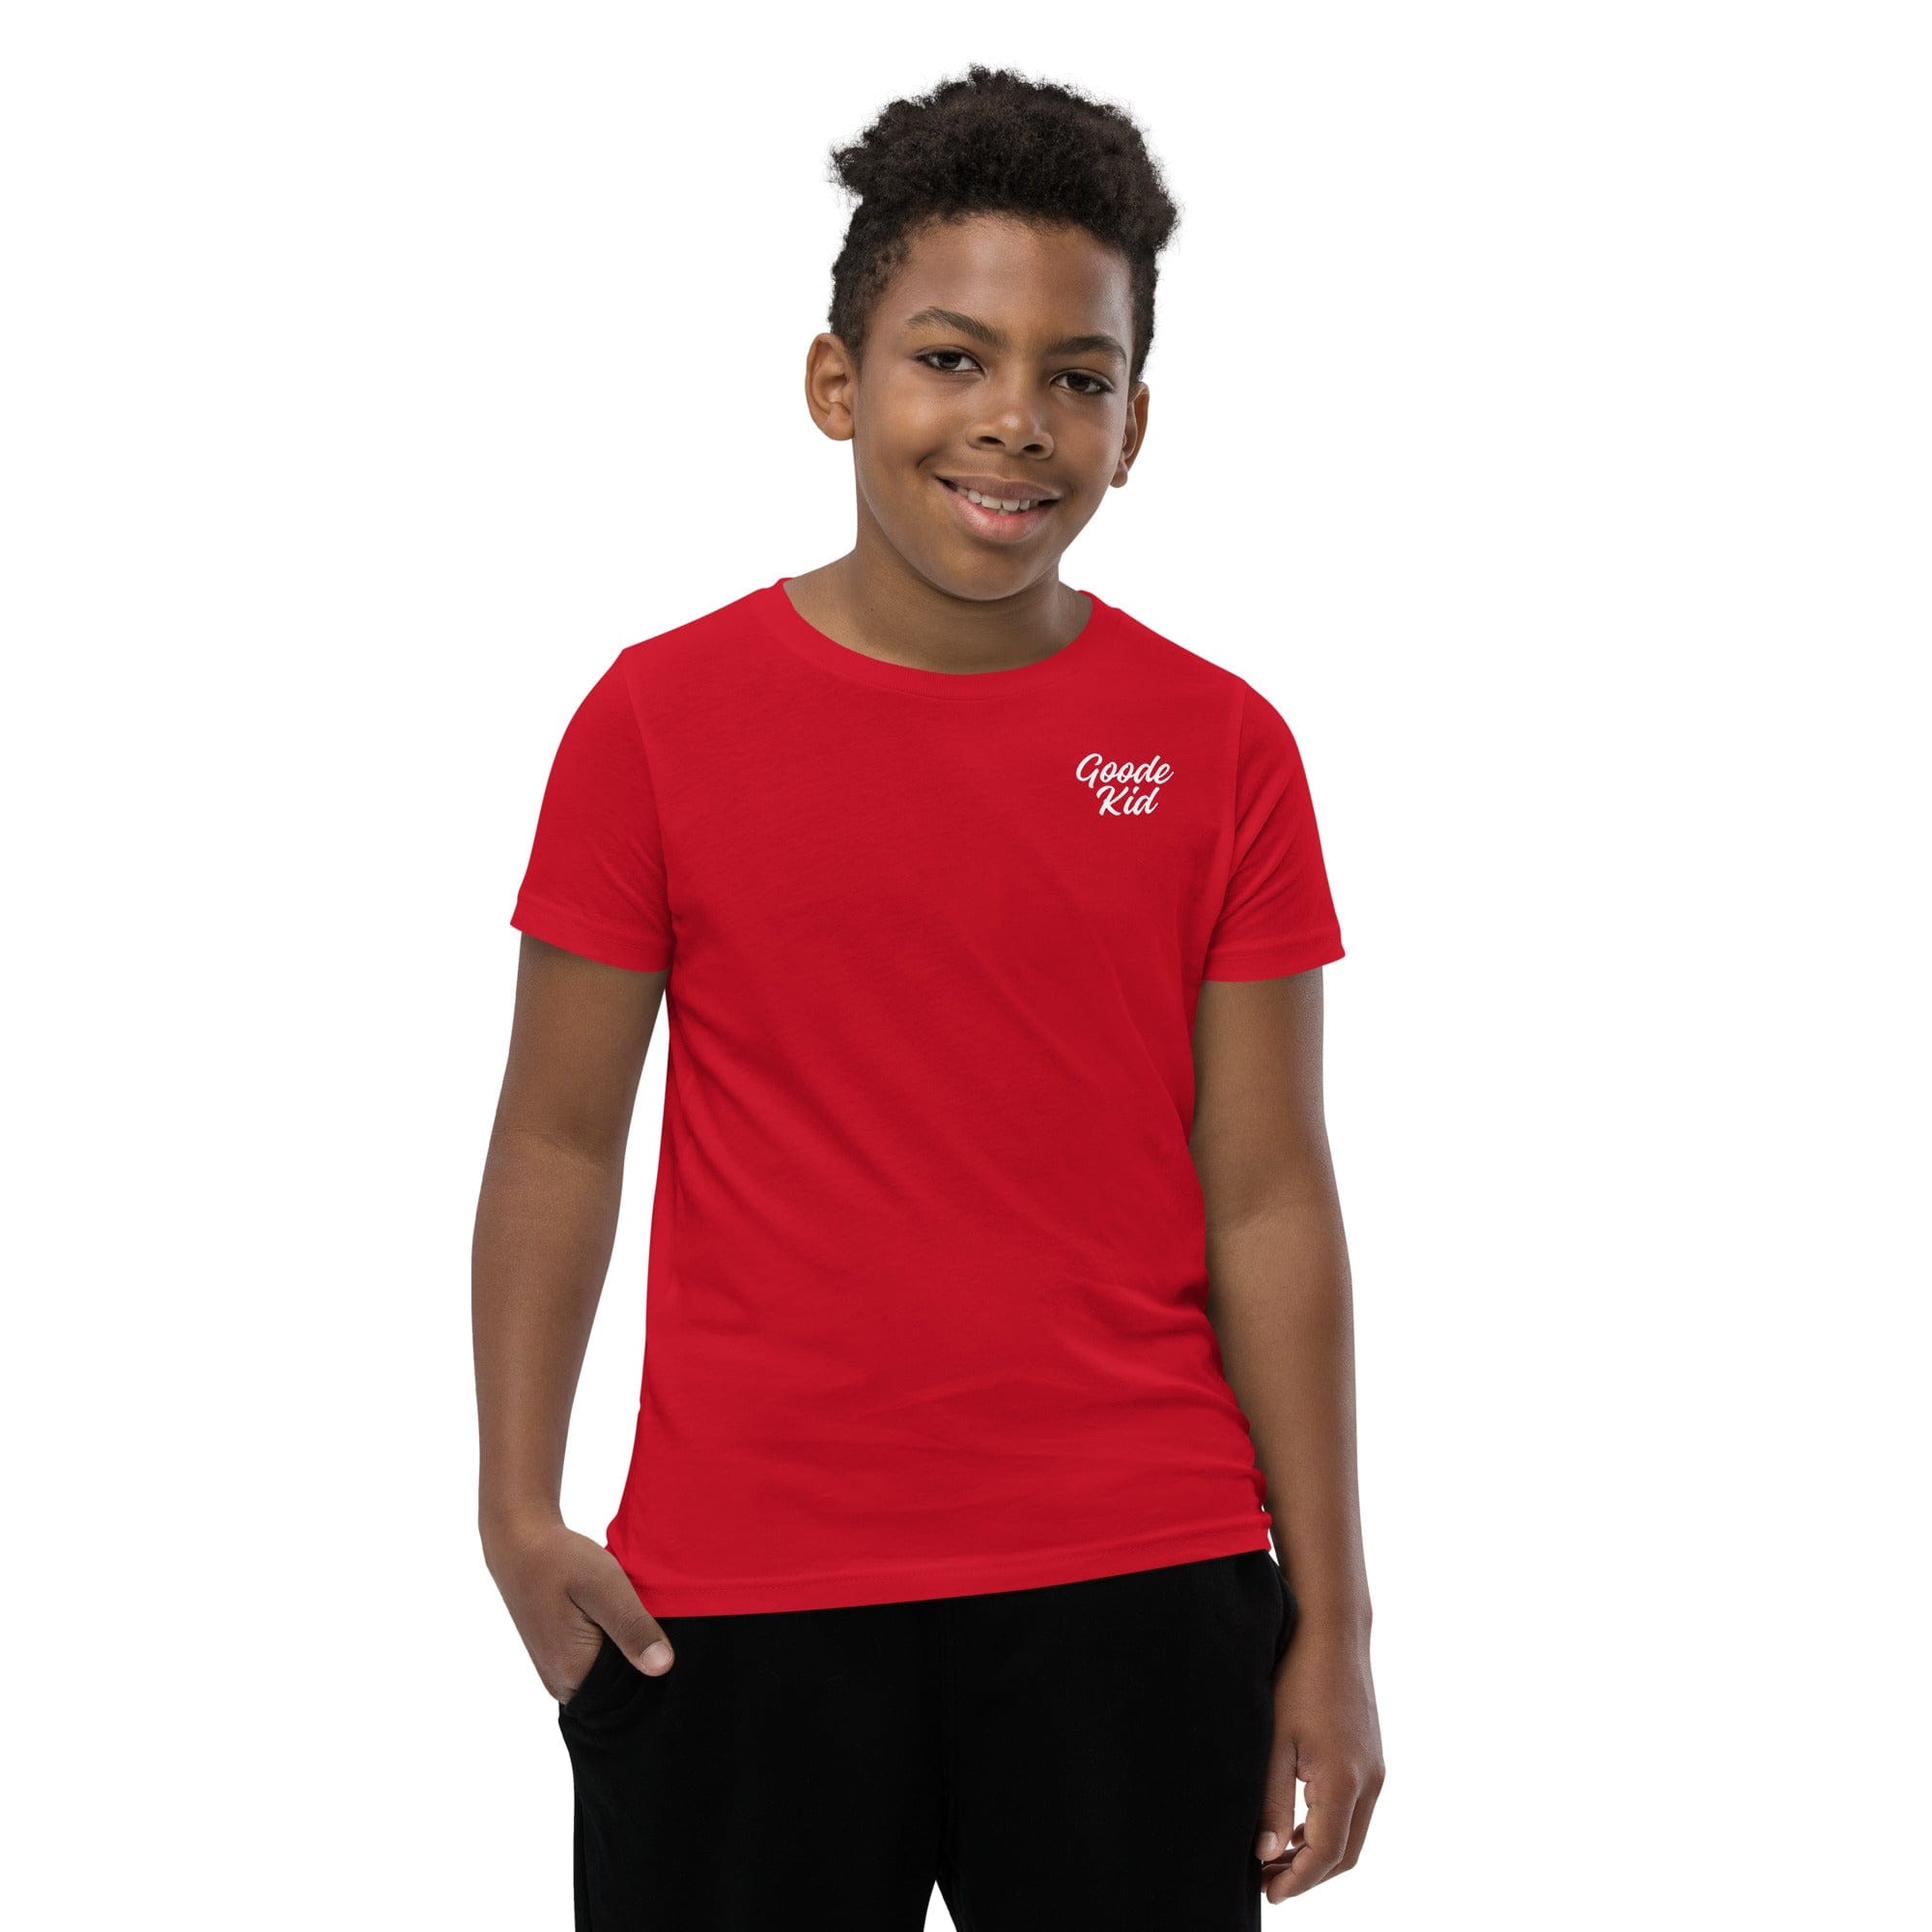 Goode Kid T-shirt | Youth Red / S kids t-shirts Jolly & Goode